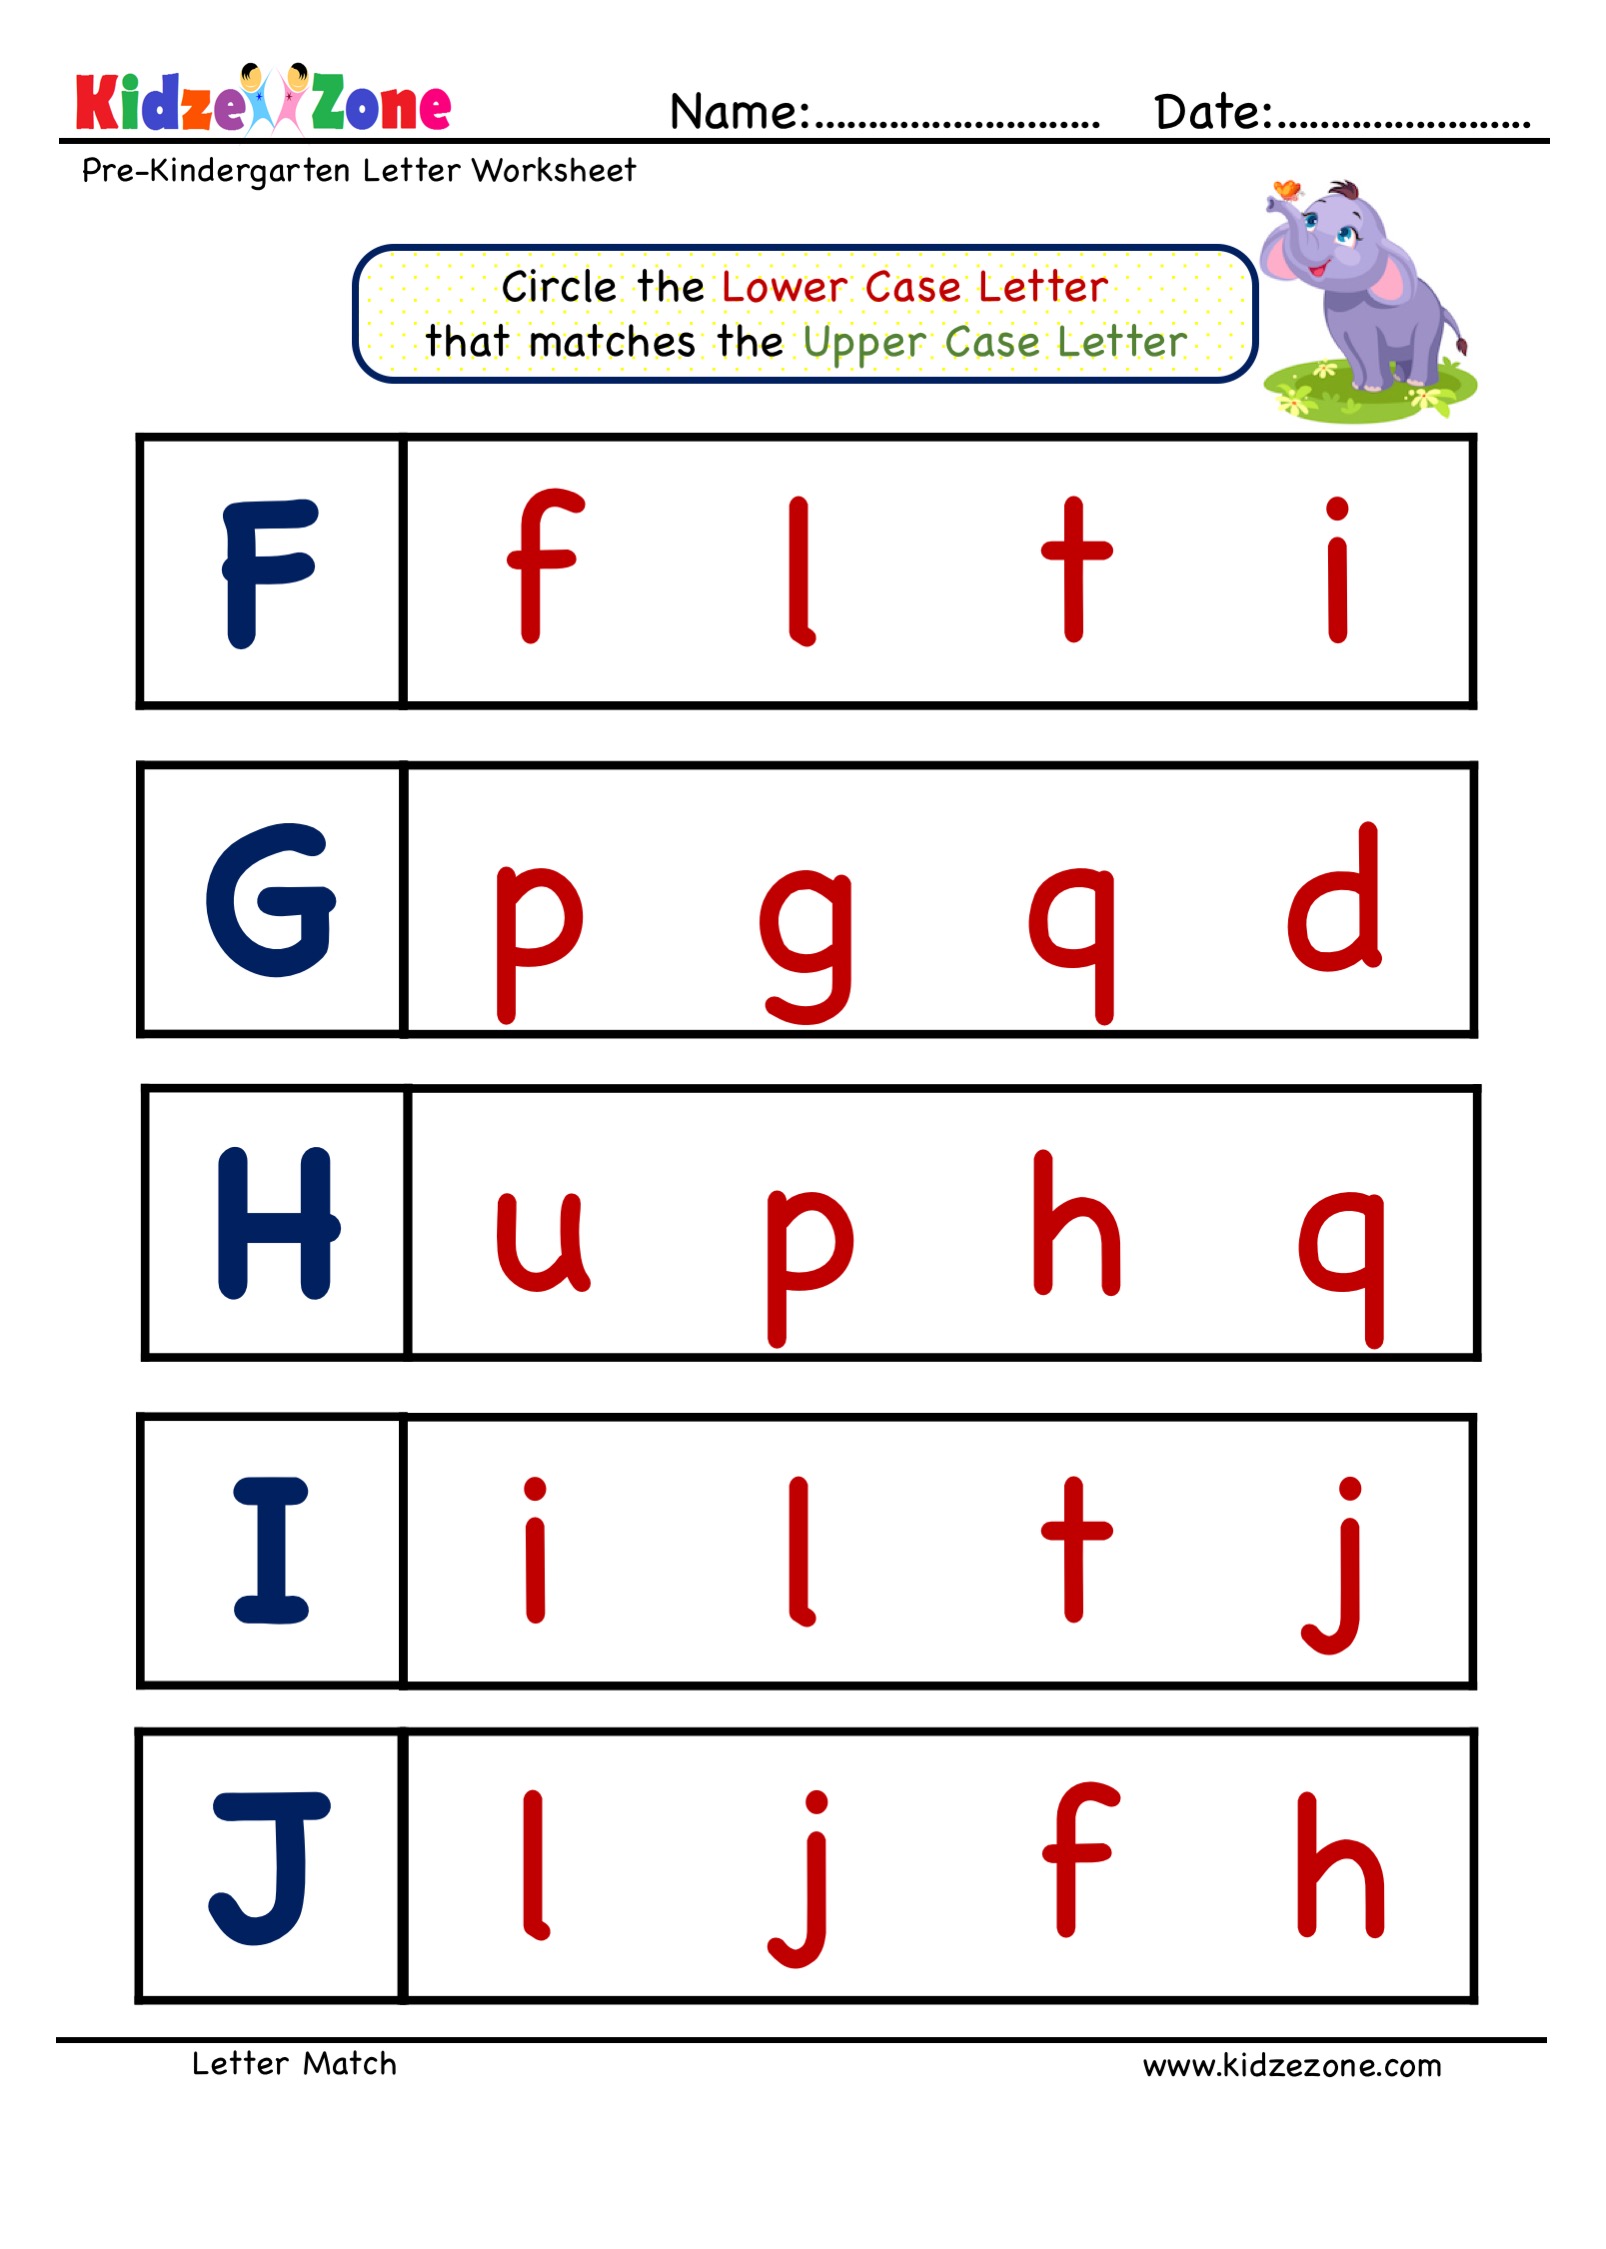 Preschool Letter Matching Upper Case To Lower Case Worksheet 1